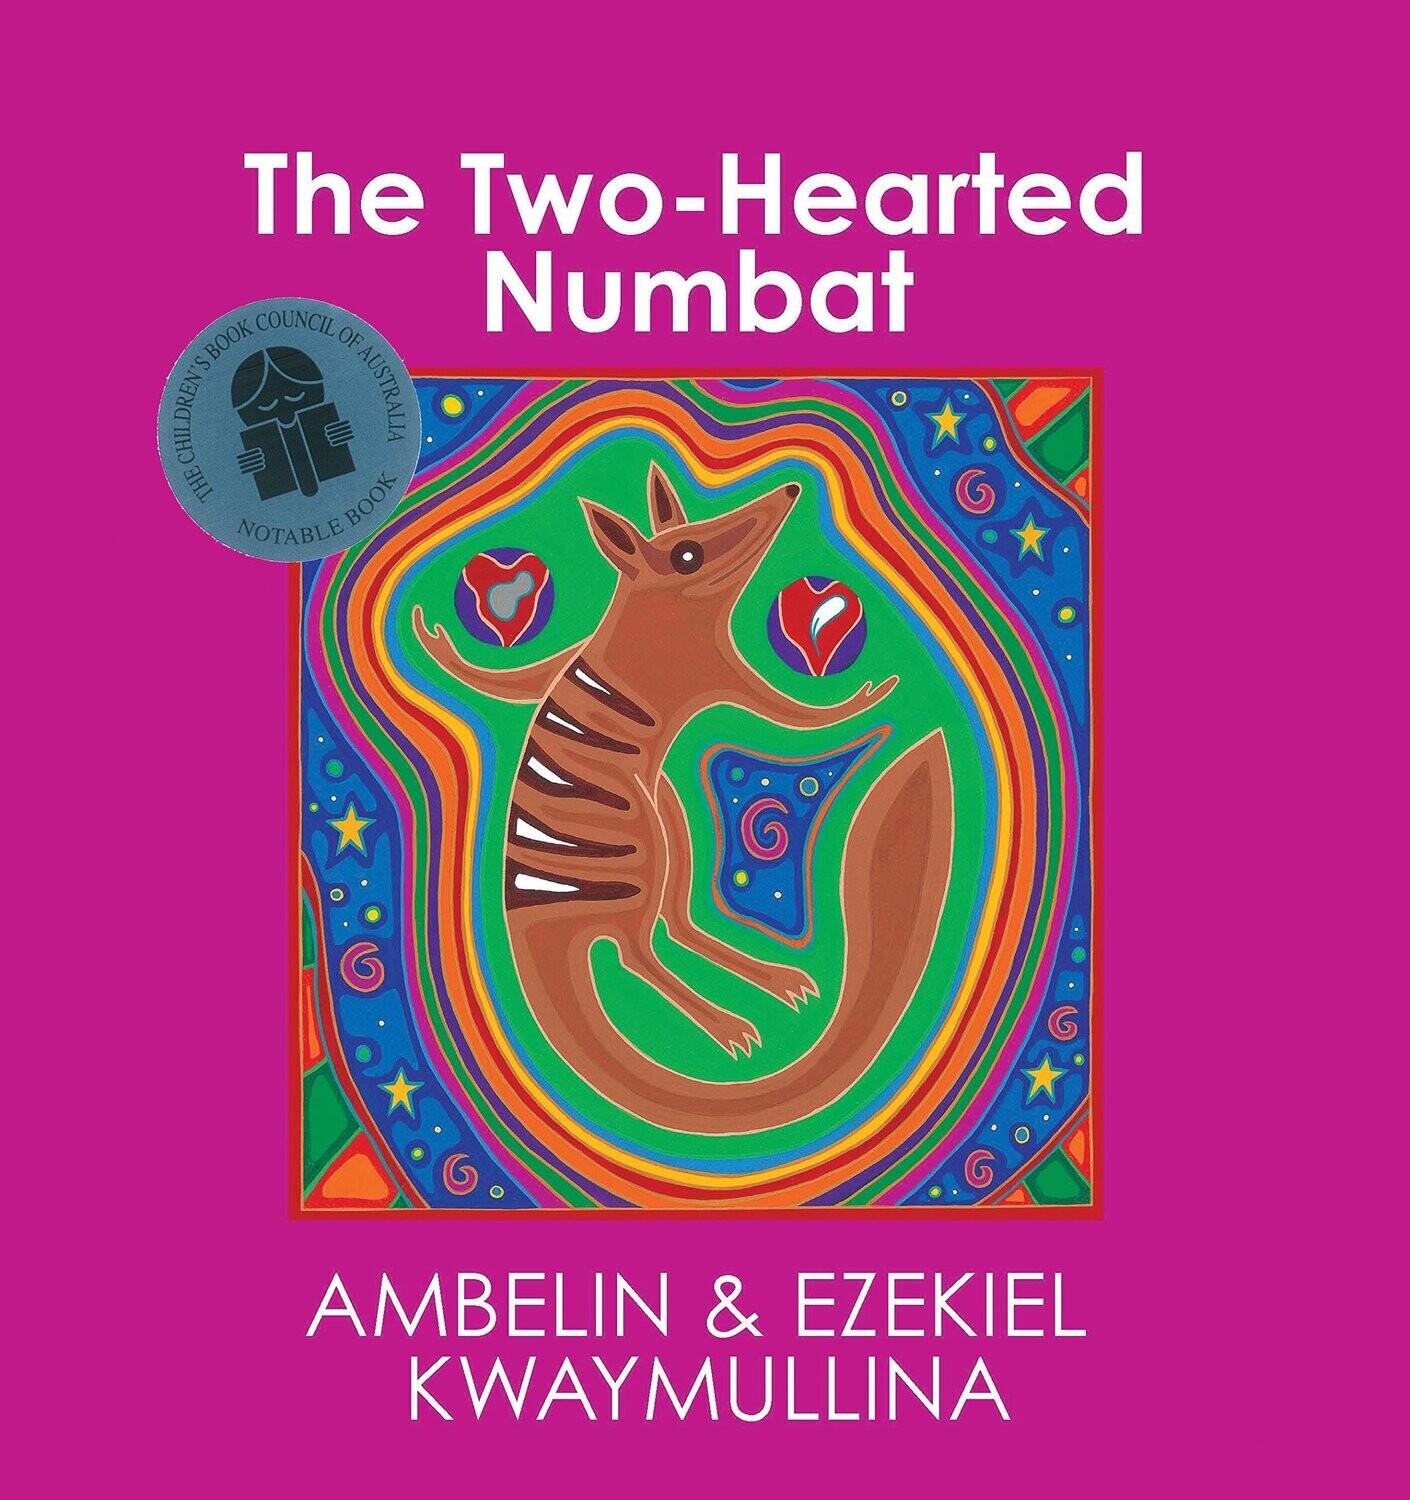 The Two-Hearted Numbat (PB) by Ambelin & Ezekiel Kwaymullina